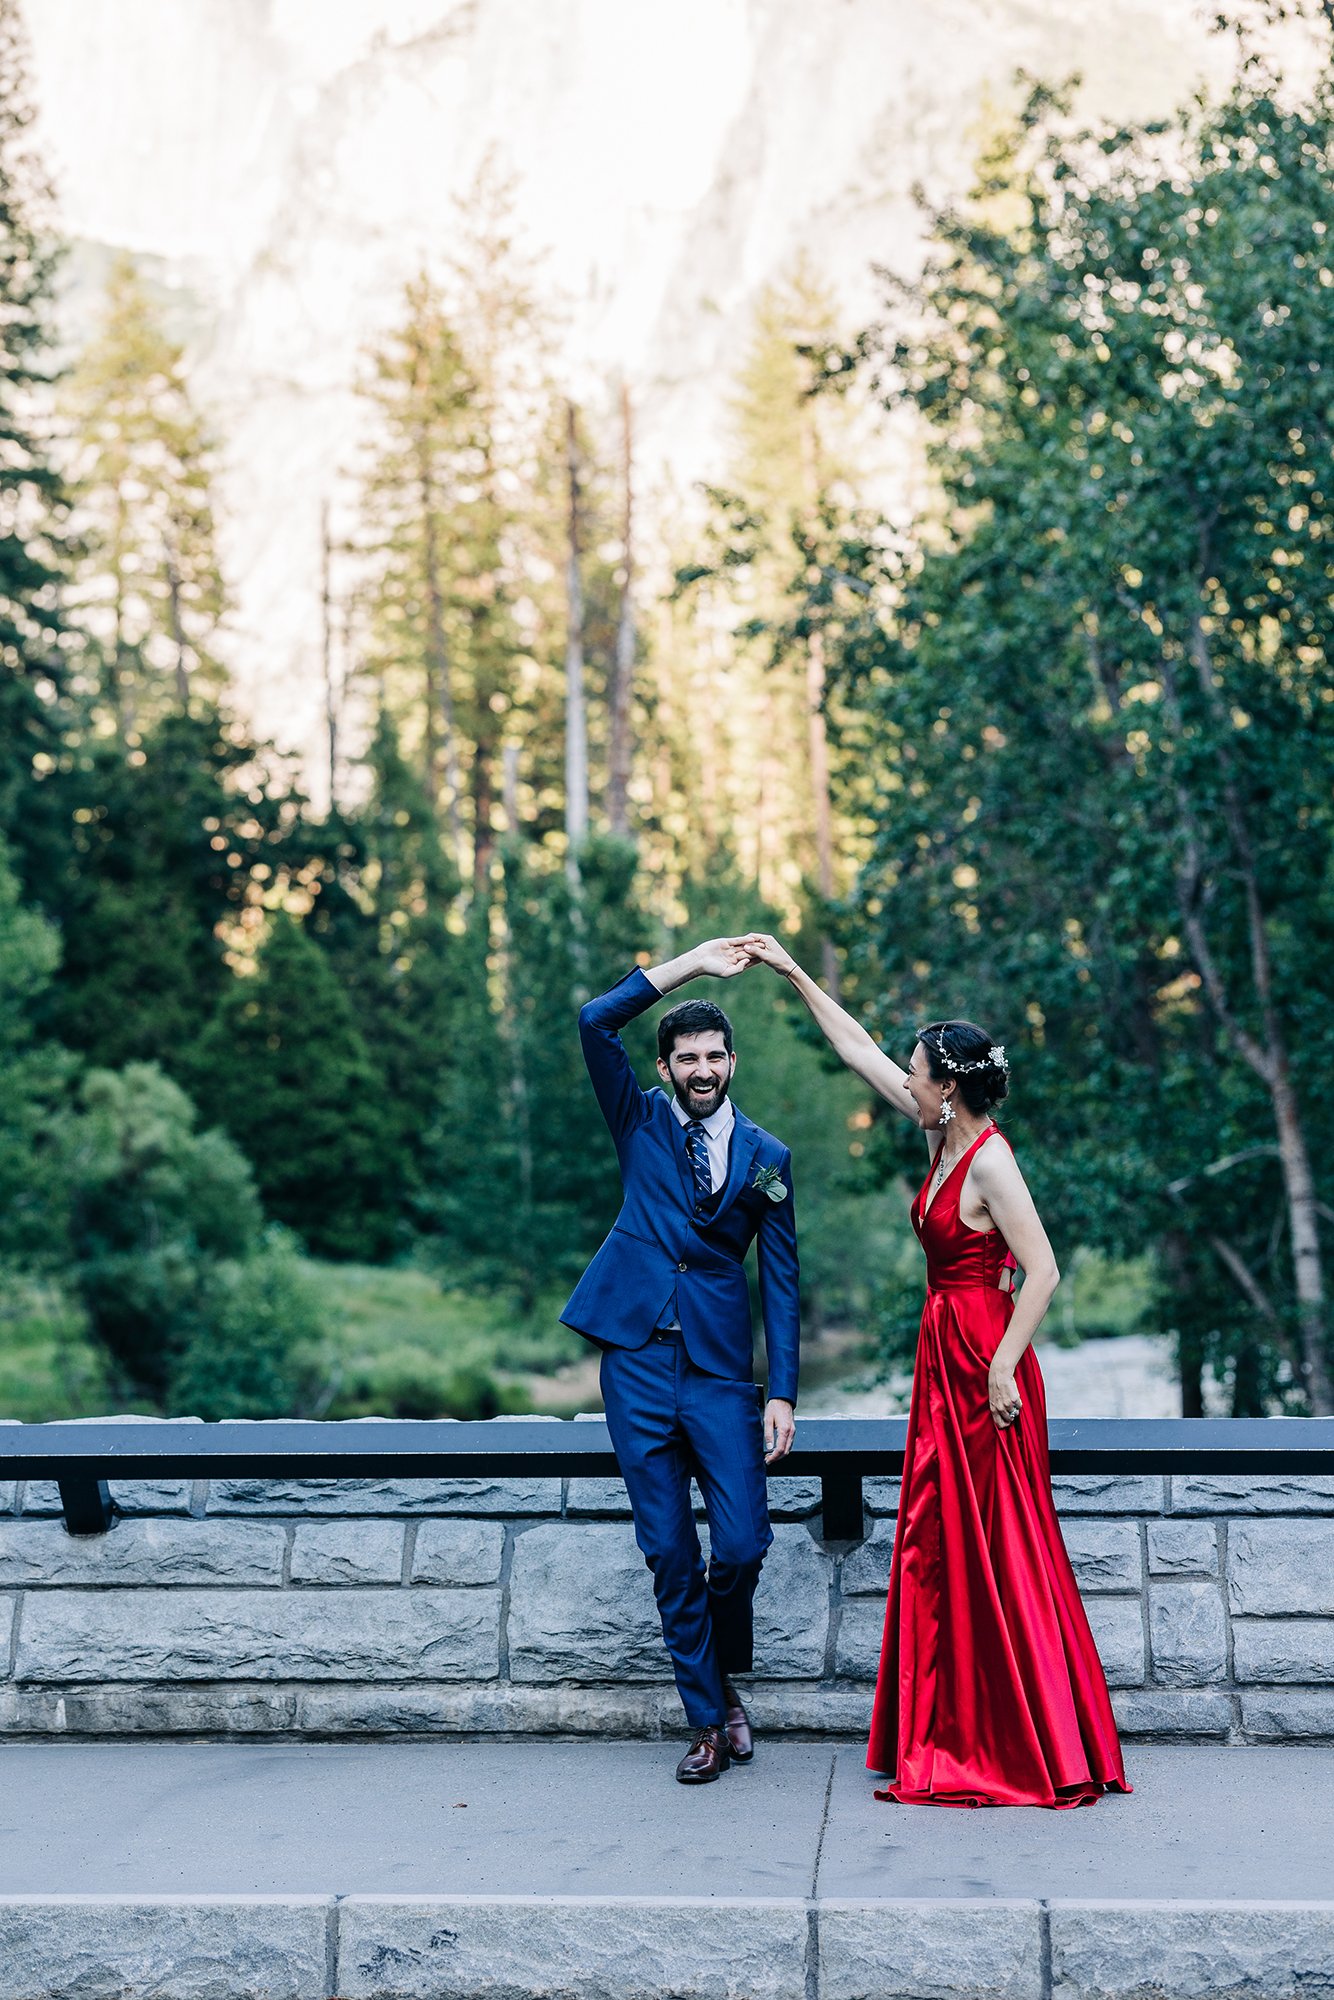 Yooree spins Jarrod during their elopement in Yosemite National Park.